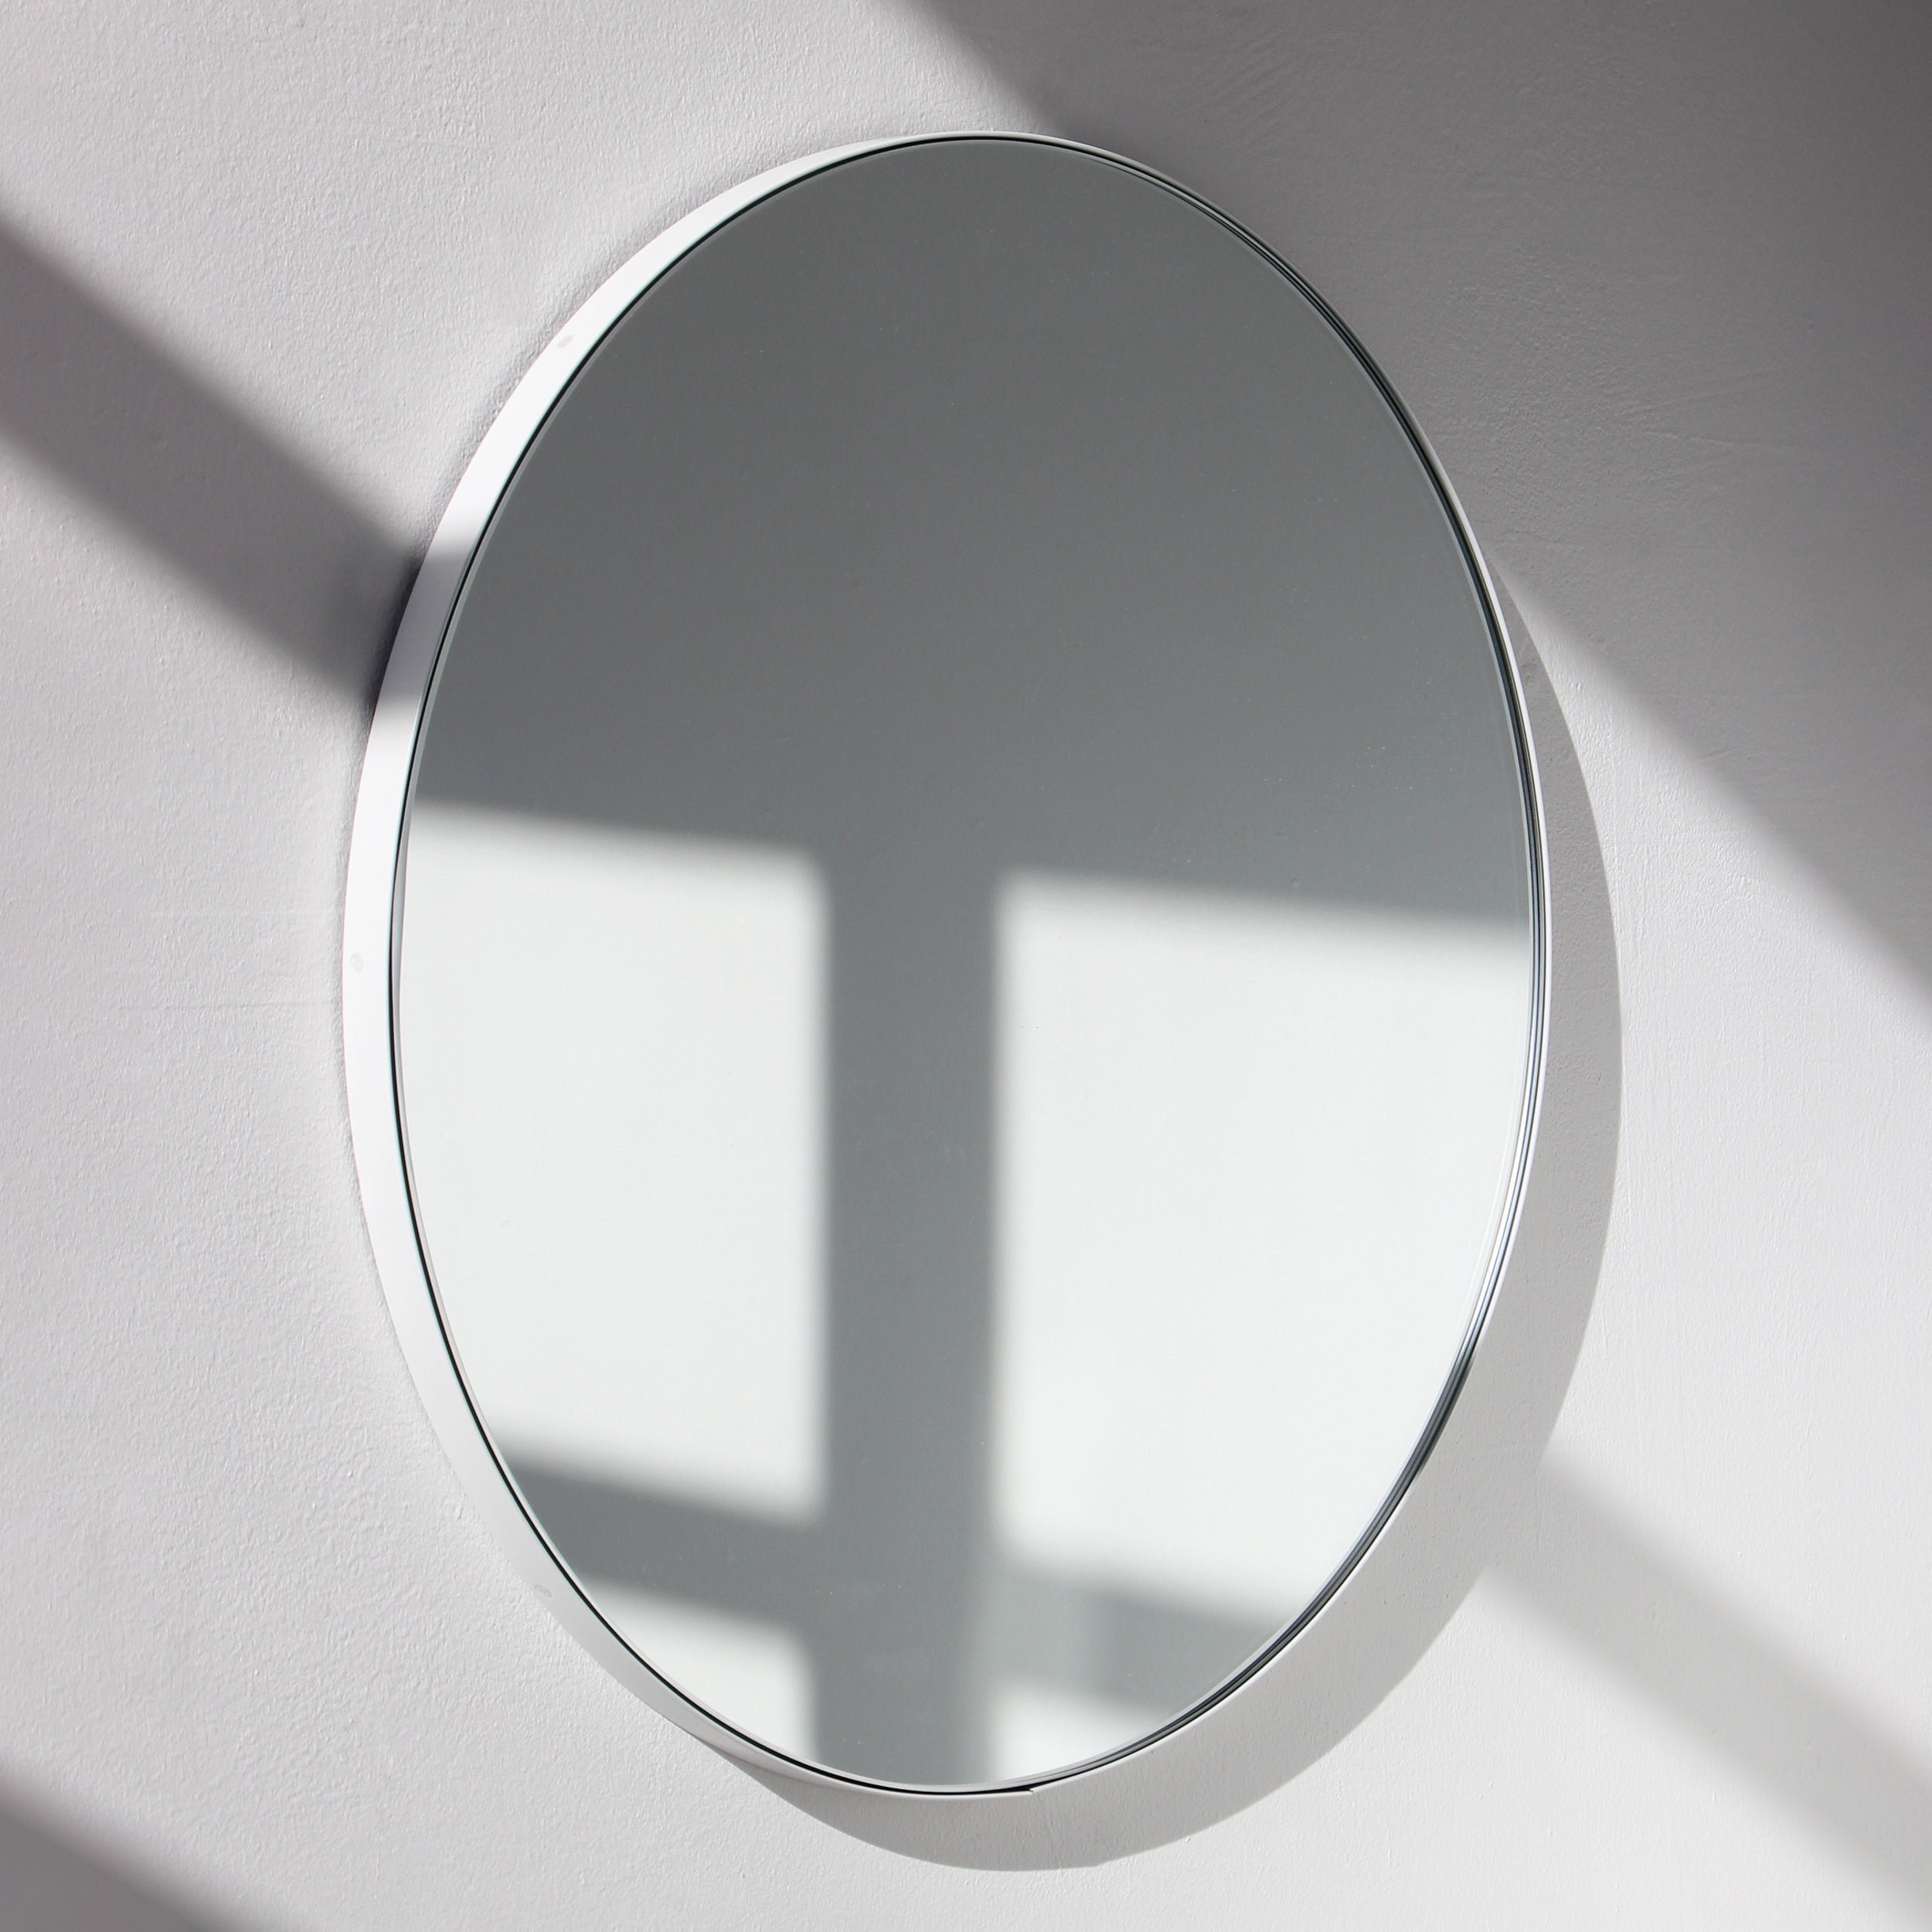 Orbis Round Modern Mirror with a White Frame, Small